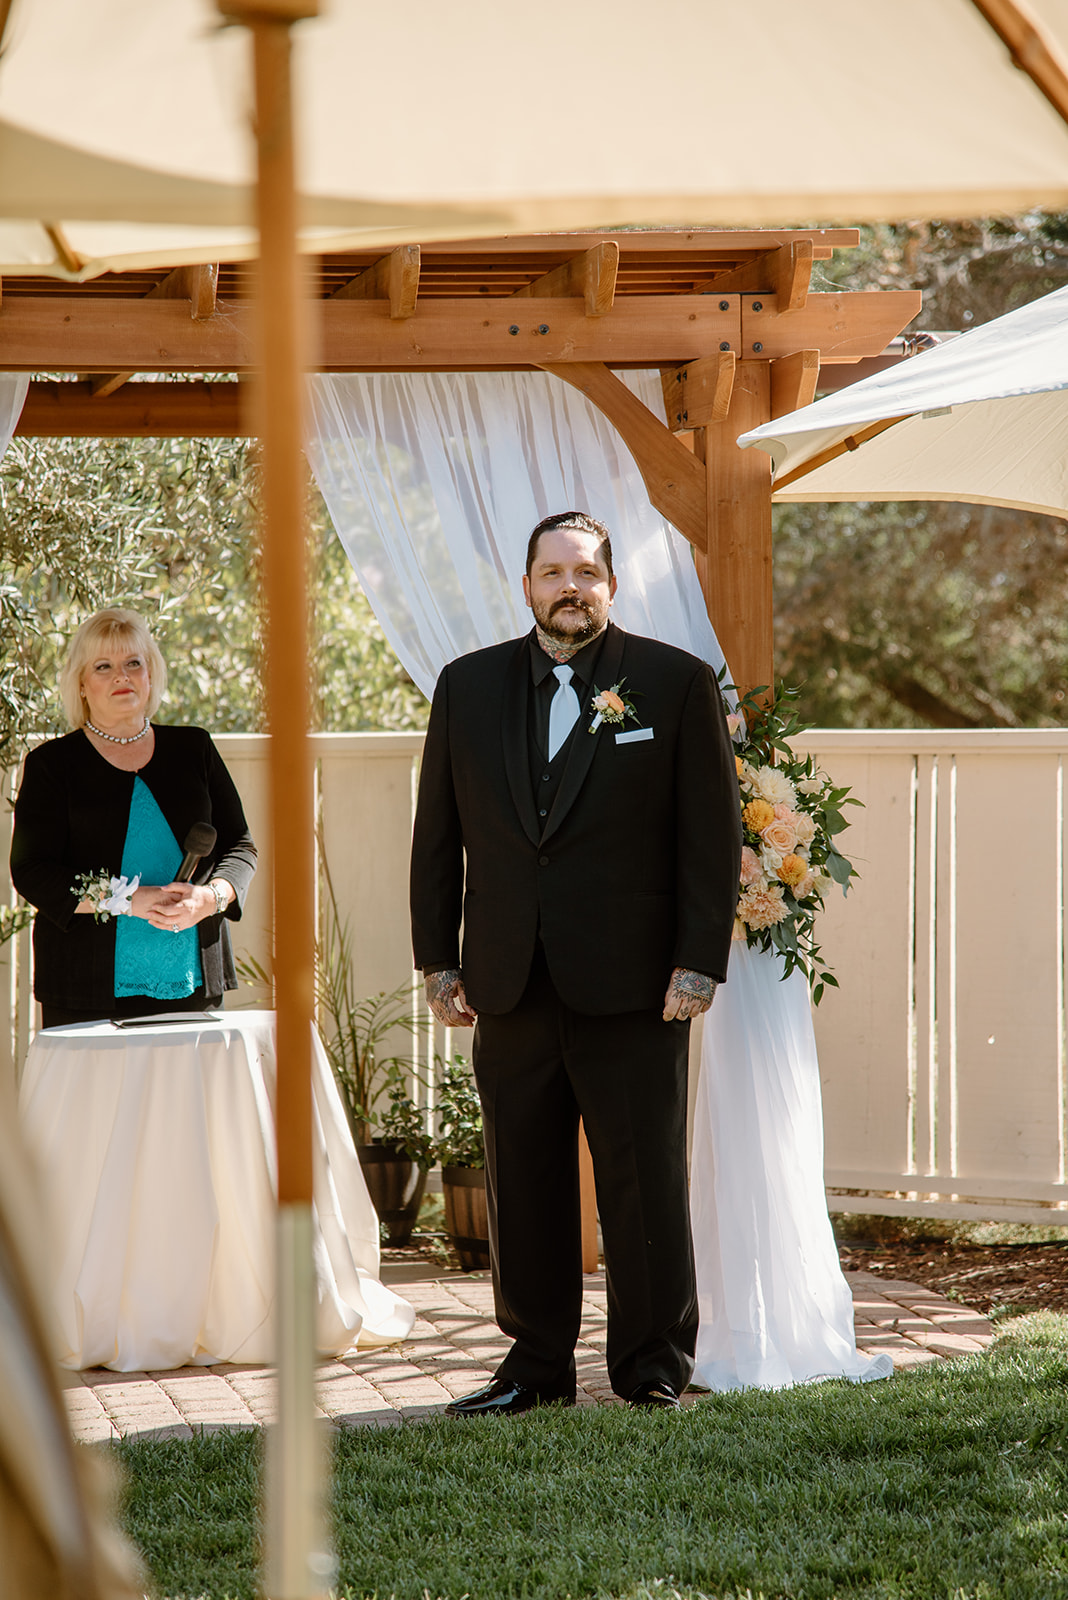 Sydney Jai Photography - Petaluma wedding, wedding ceremony, groom style